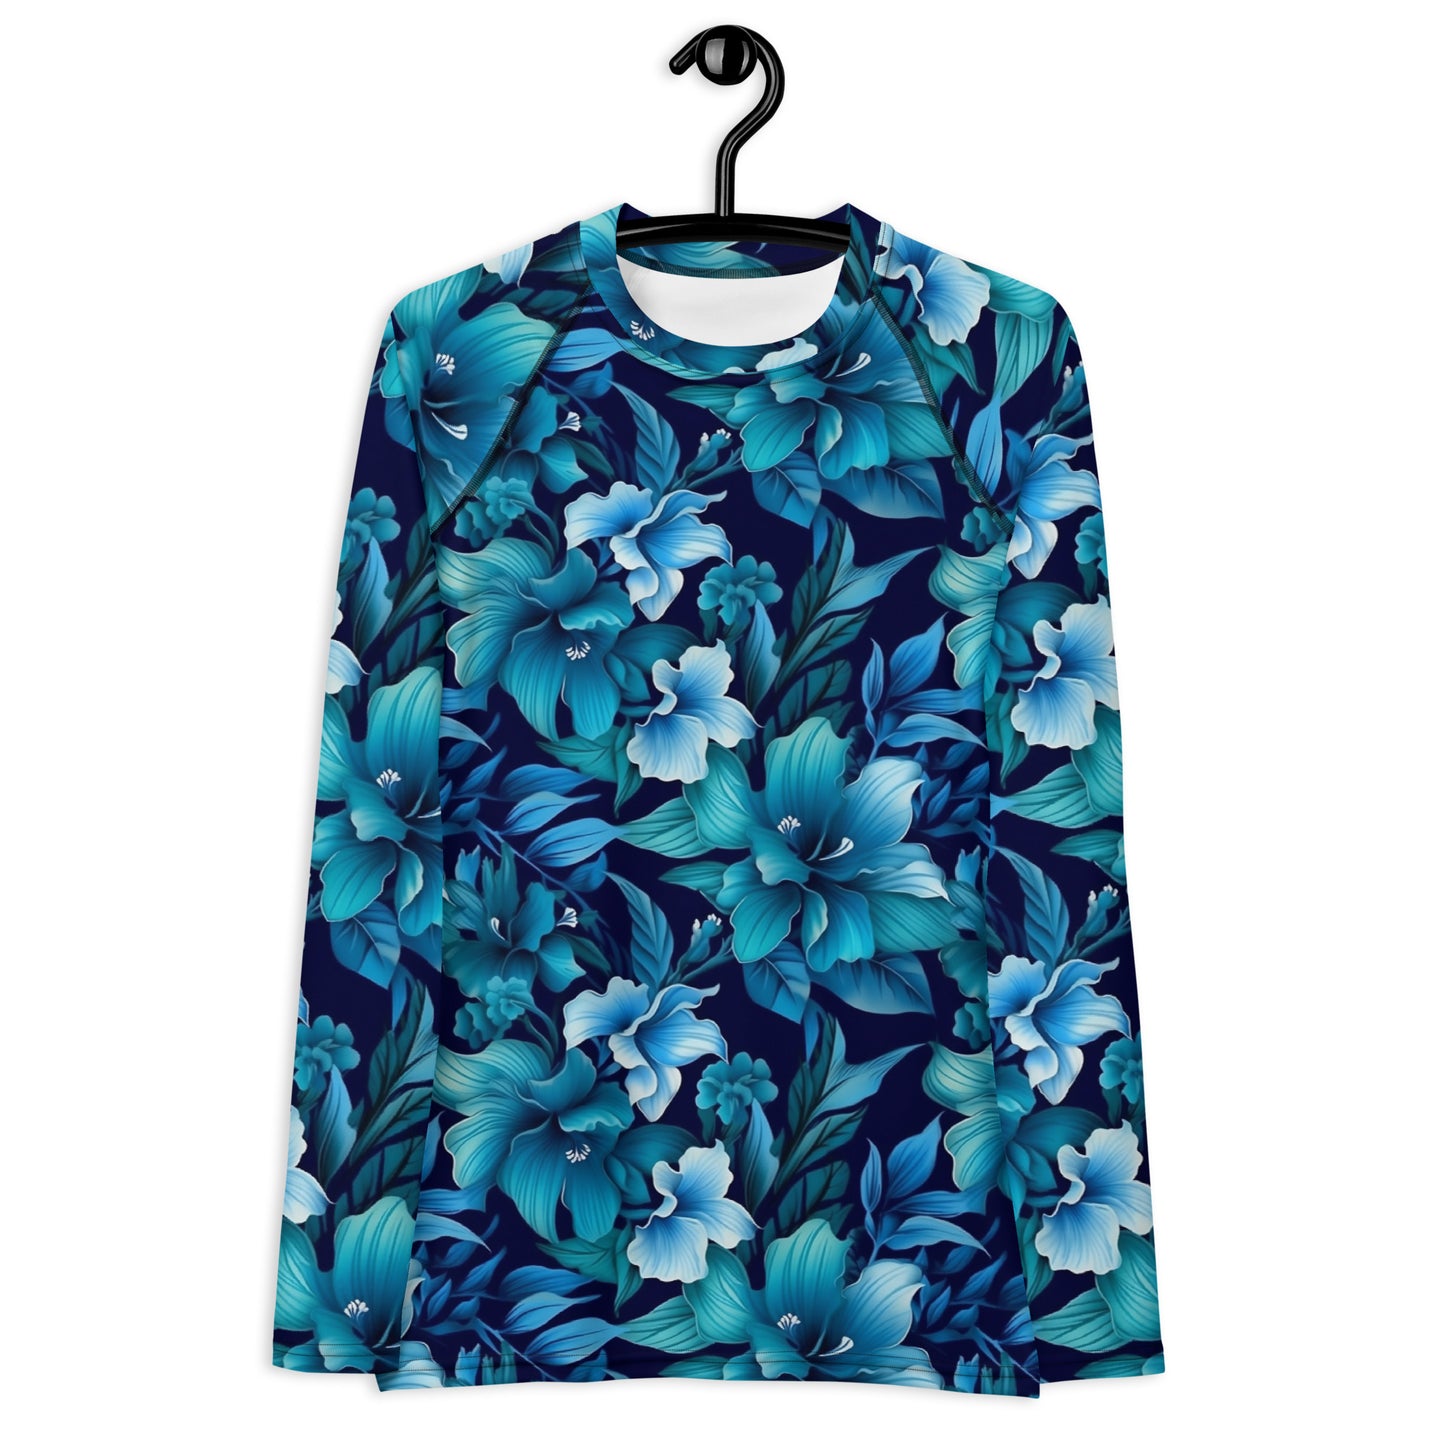 Blue Flowers Women's Rash Guard, Floral Print Surf Long Sleeve Swim Shirt Sun Protection Designer 50 UPF SPF UV Cover